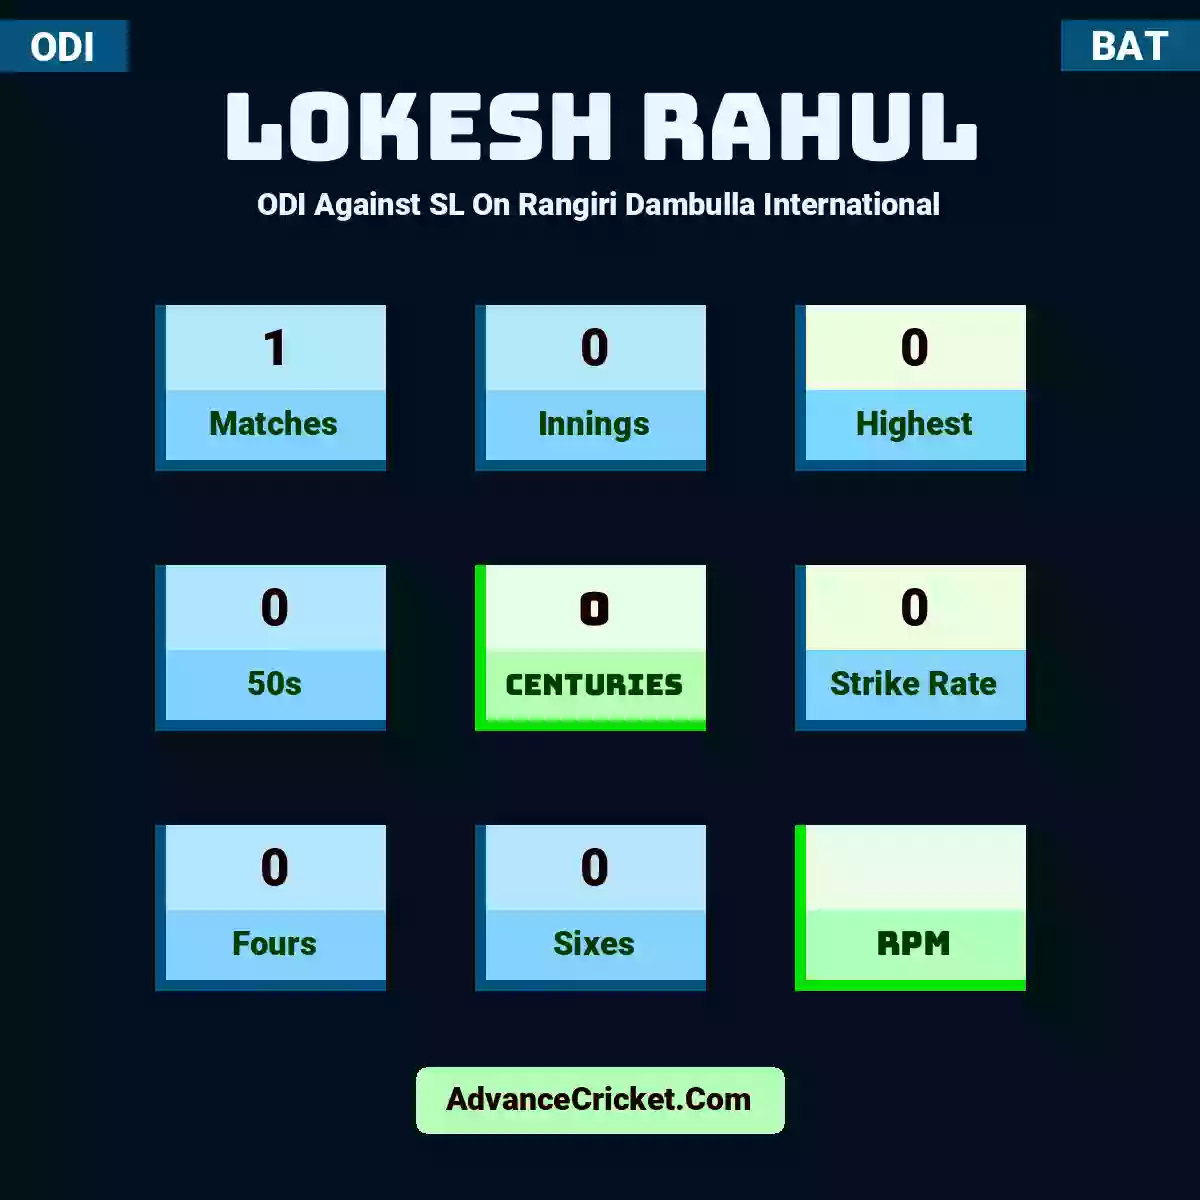 Lokesh Rahul ODI  Against SL On Rangiri Dambulla International, Lokesh Rahul played 1 matches, scored 0 runs as highest, 0 half-centuries, and 0 centuries, with a strike rate of 0. KL.Rahul hit 0 fours and 0 sixes.